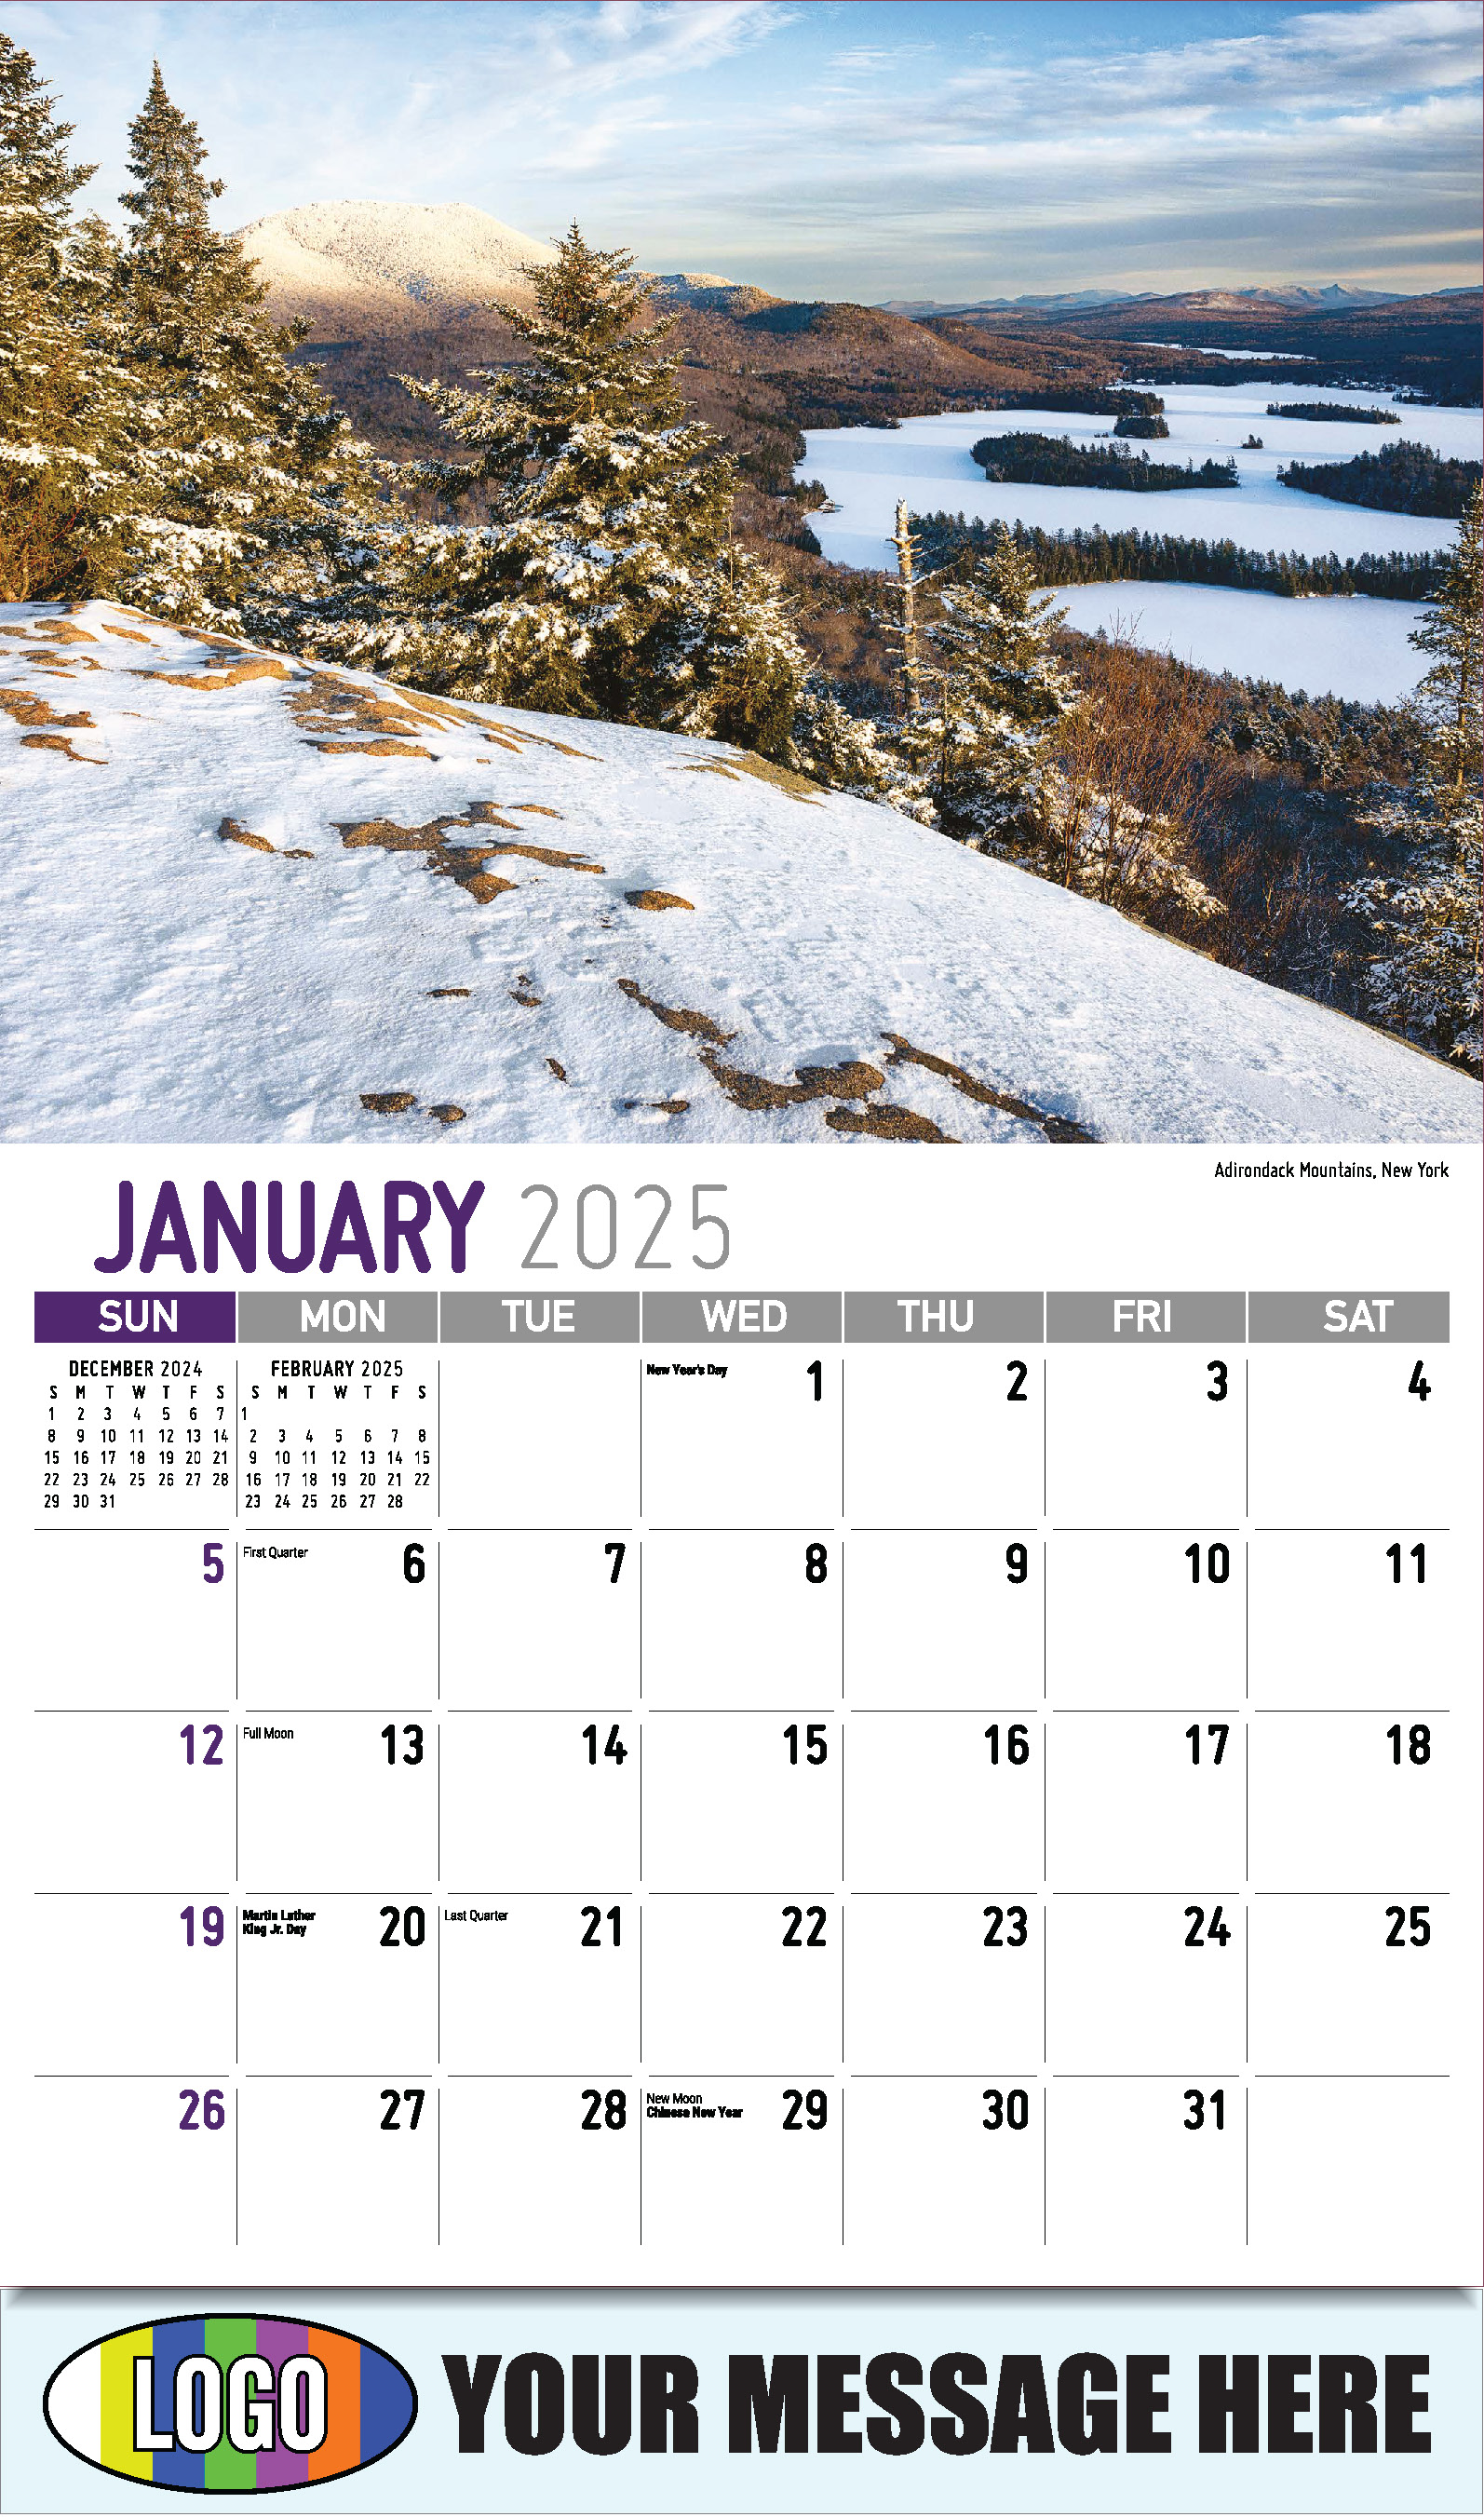 Scenes of America 2025 Business Advertising Wall Calendar - January